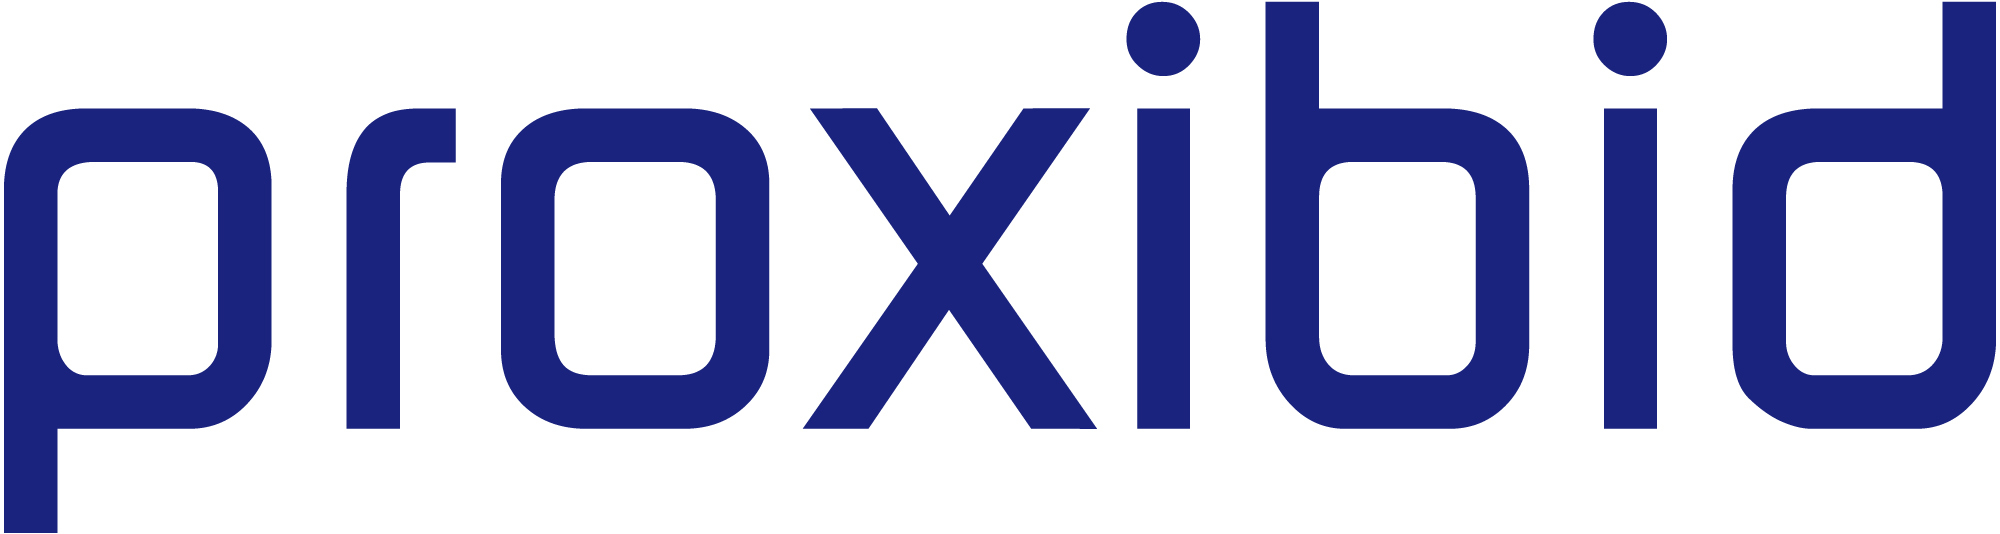 Proxibid company logo